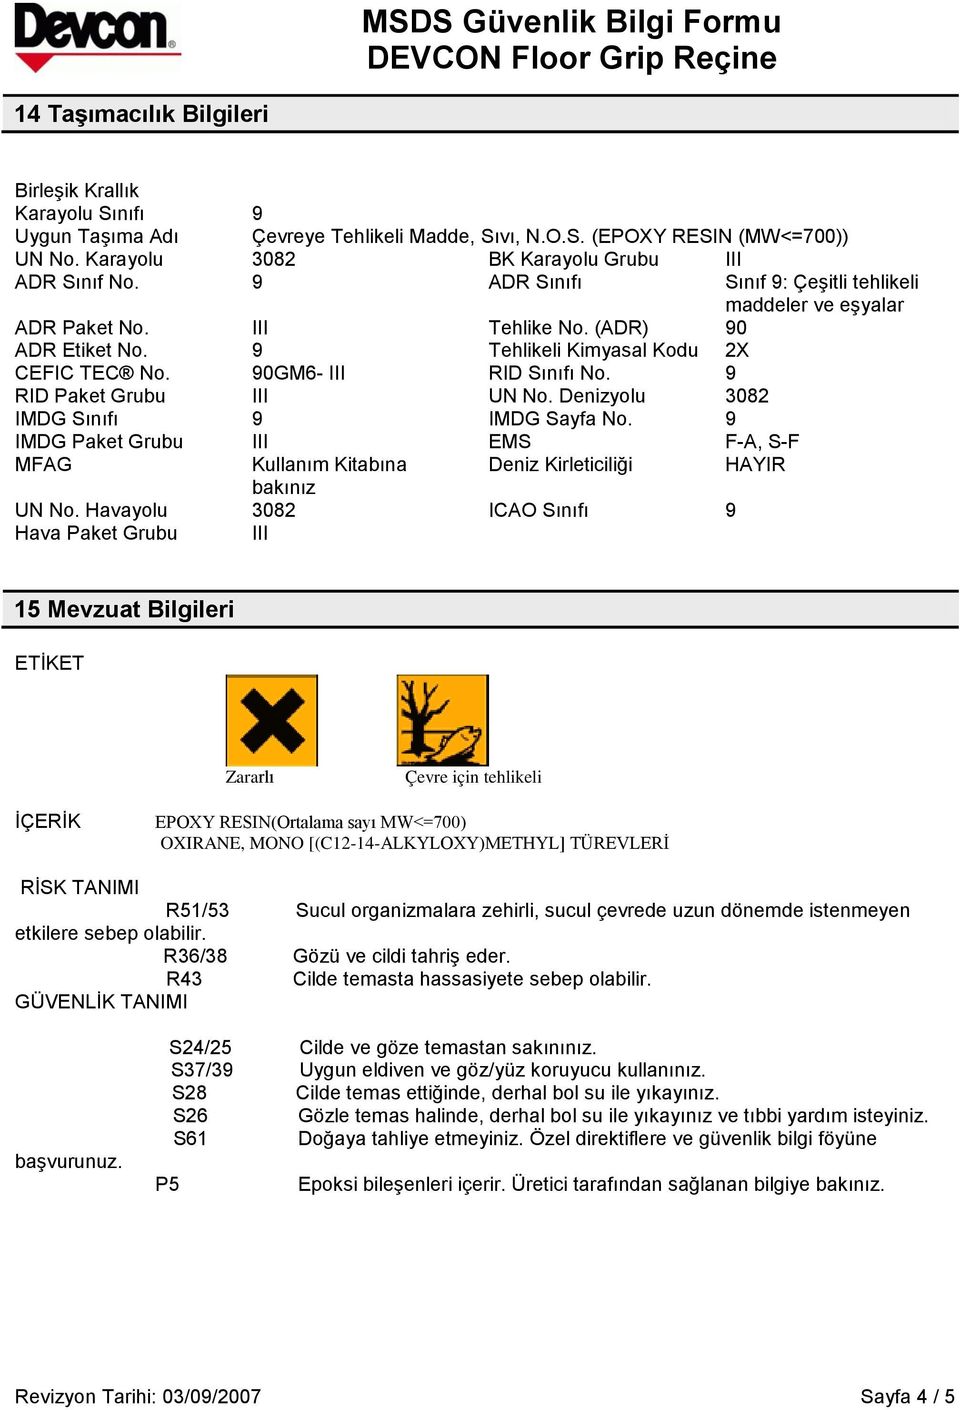 9 RID Paket Grubu III UN No. Denizyolu 3082 IMDG Sınıfı 9 IMDG Sayfa No. 9 IMDG Paket Grubu III EMS F-A, S-F MFAG Kullanım Kitabına Deniz Kirleticiliği HAYIR bakınız UN No.